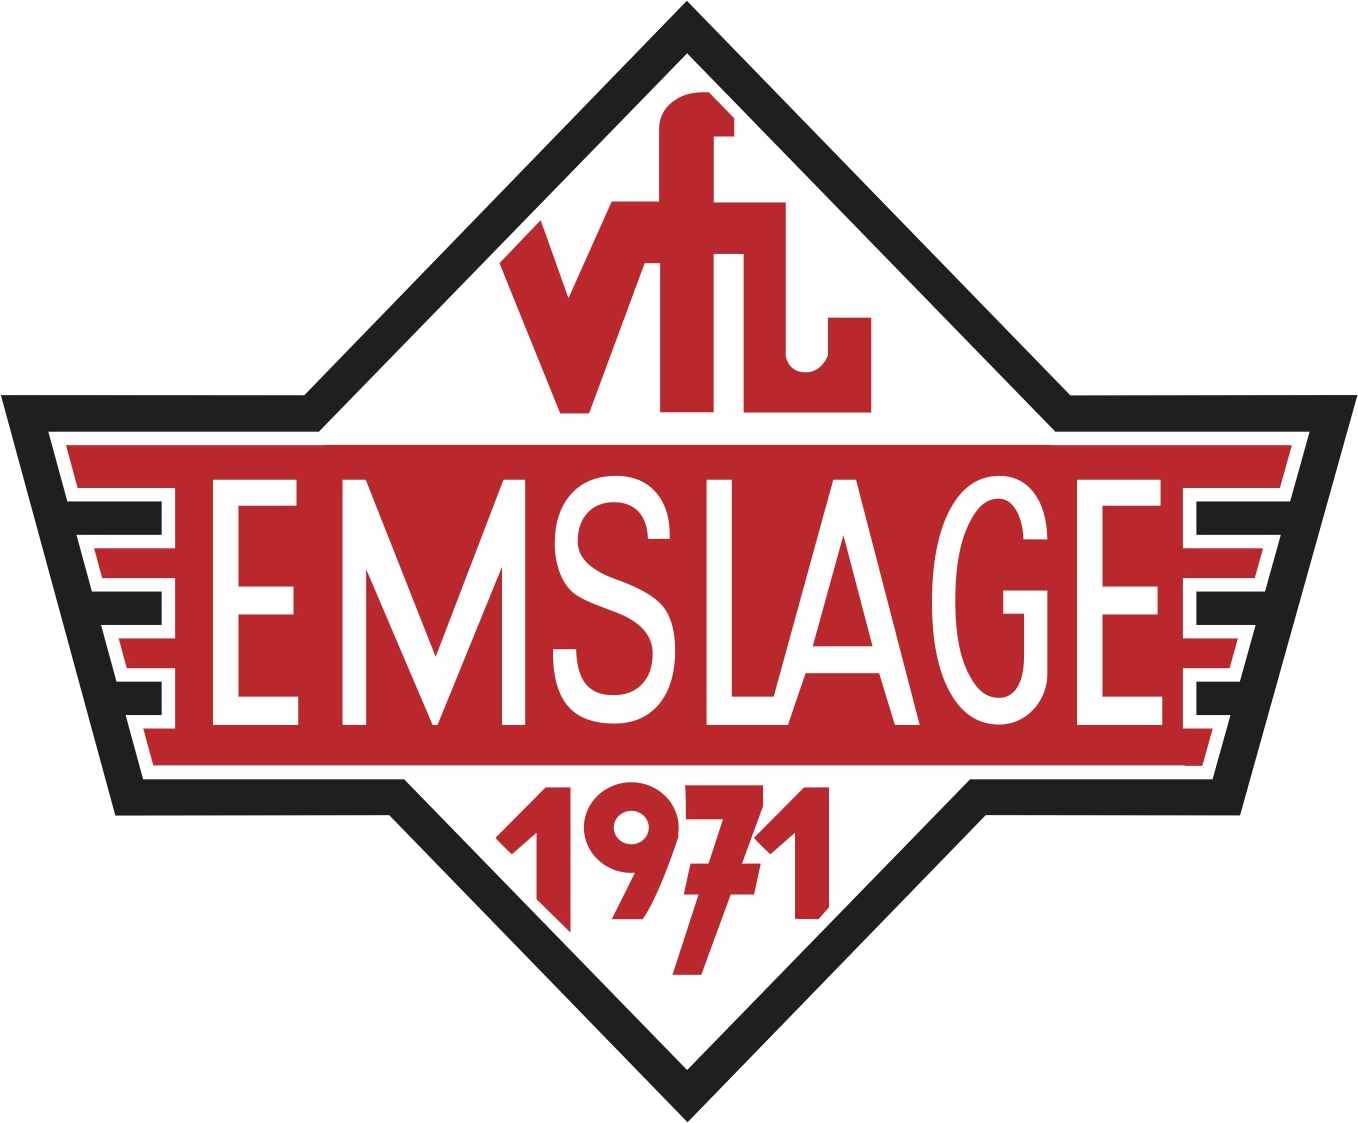 VfL Emslage e.V. 1971